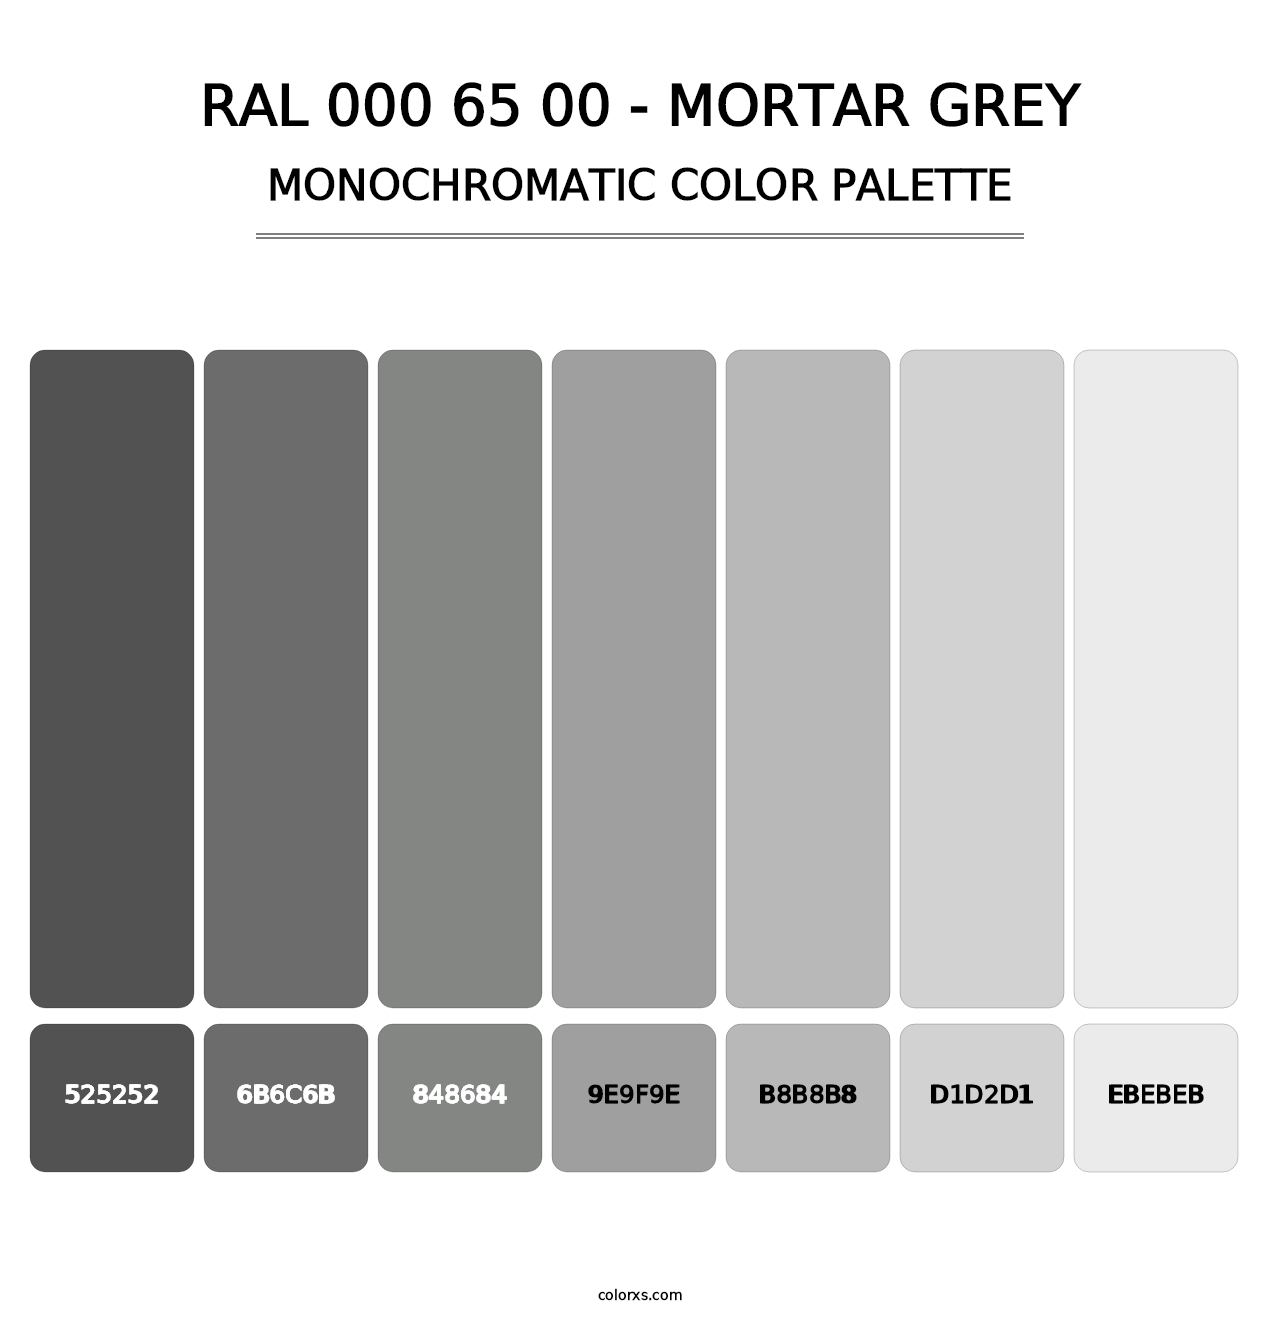 RAL 000 65 00 - Mortar Grey - Monochromatic Color Palette